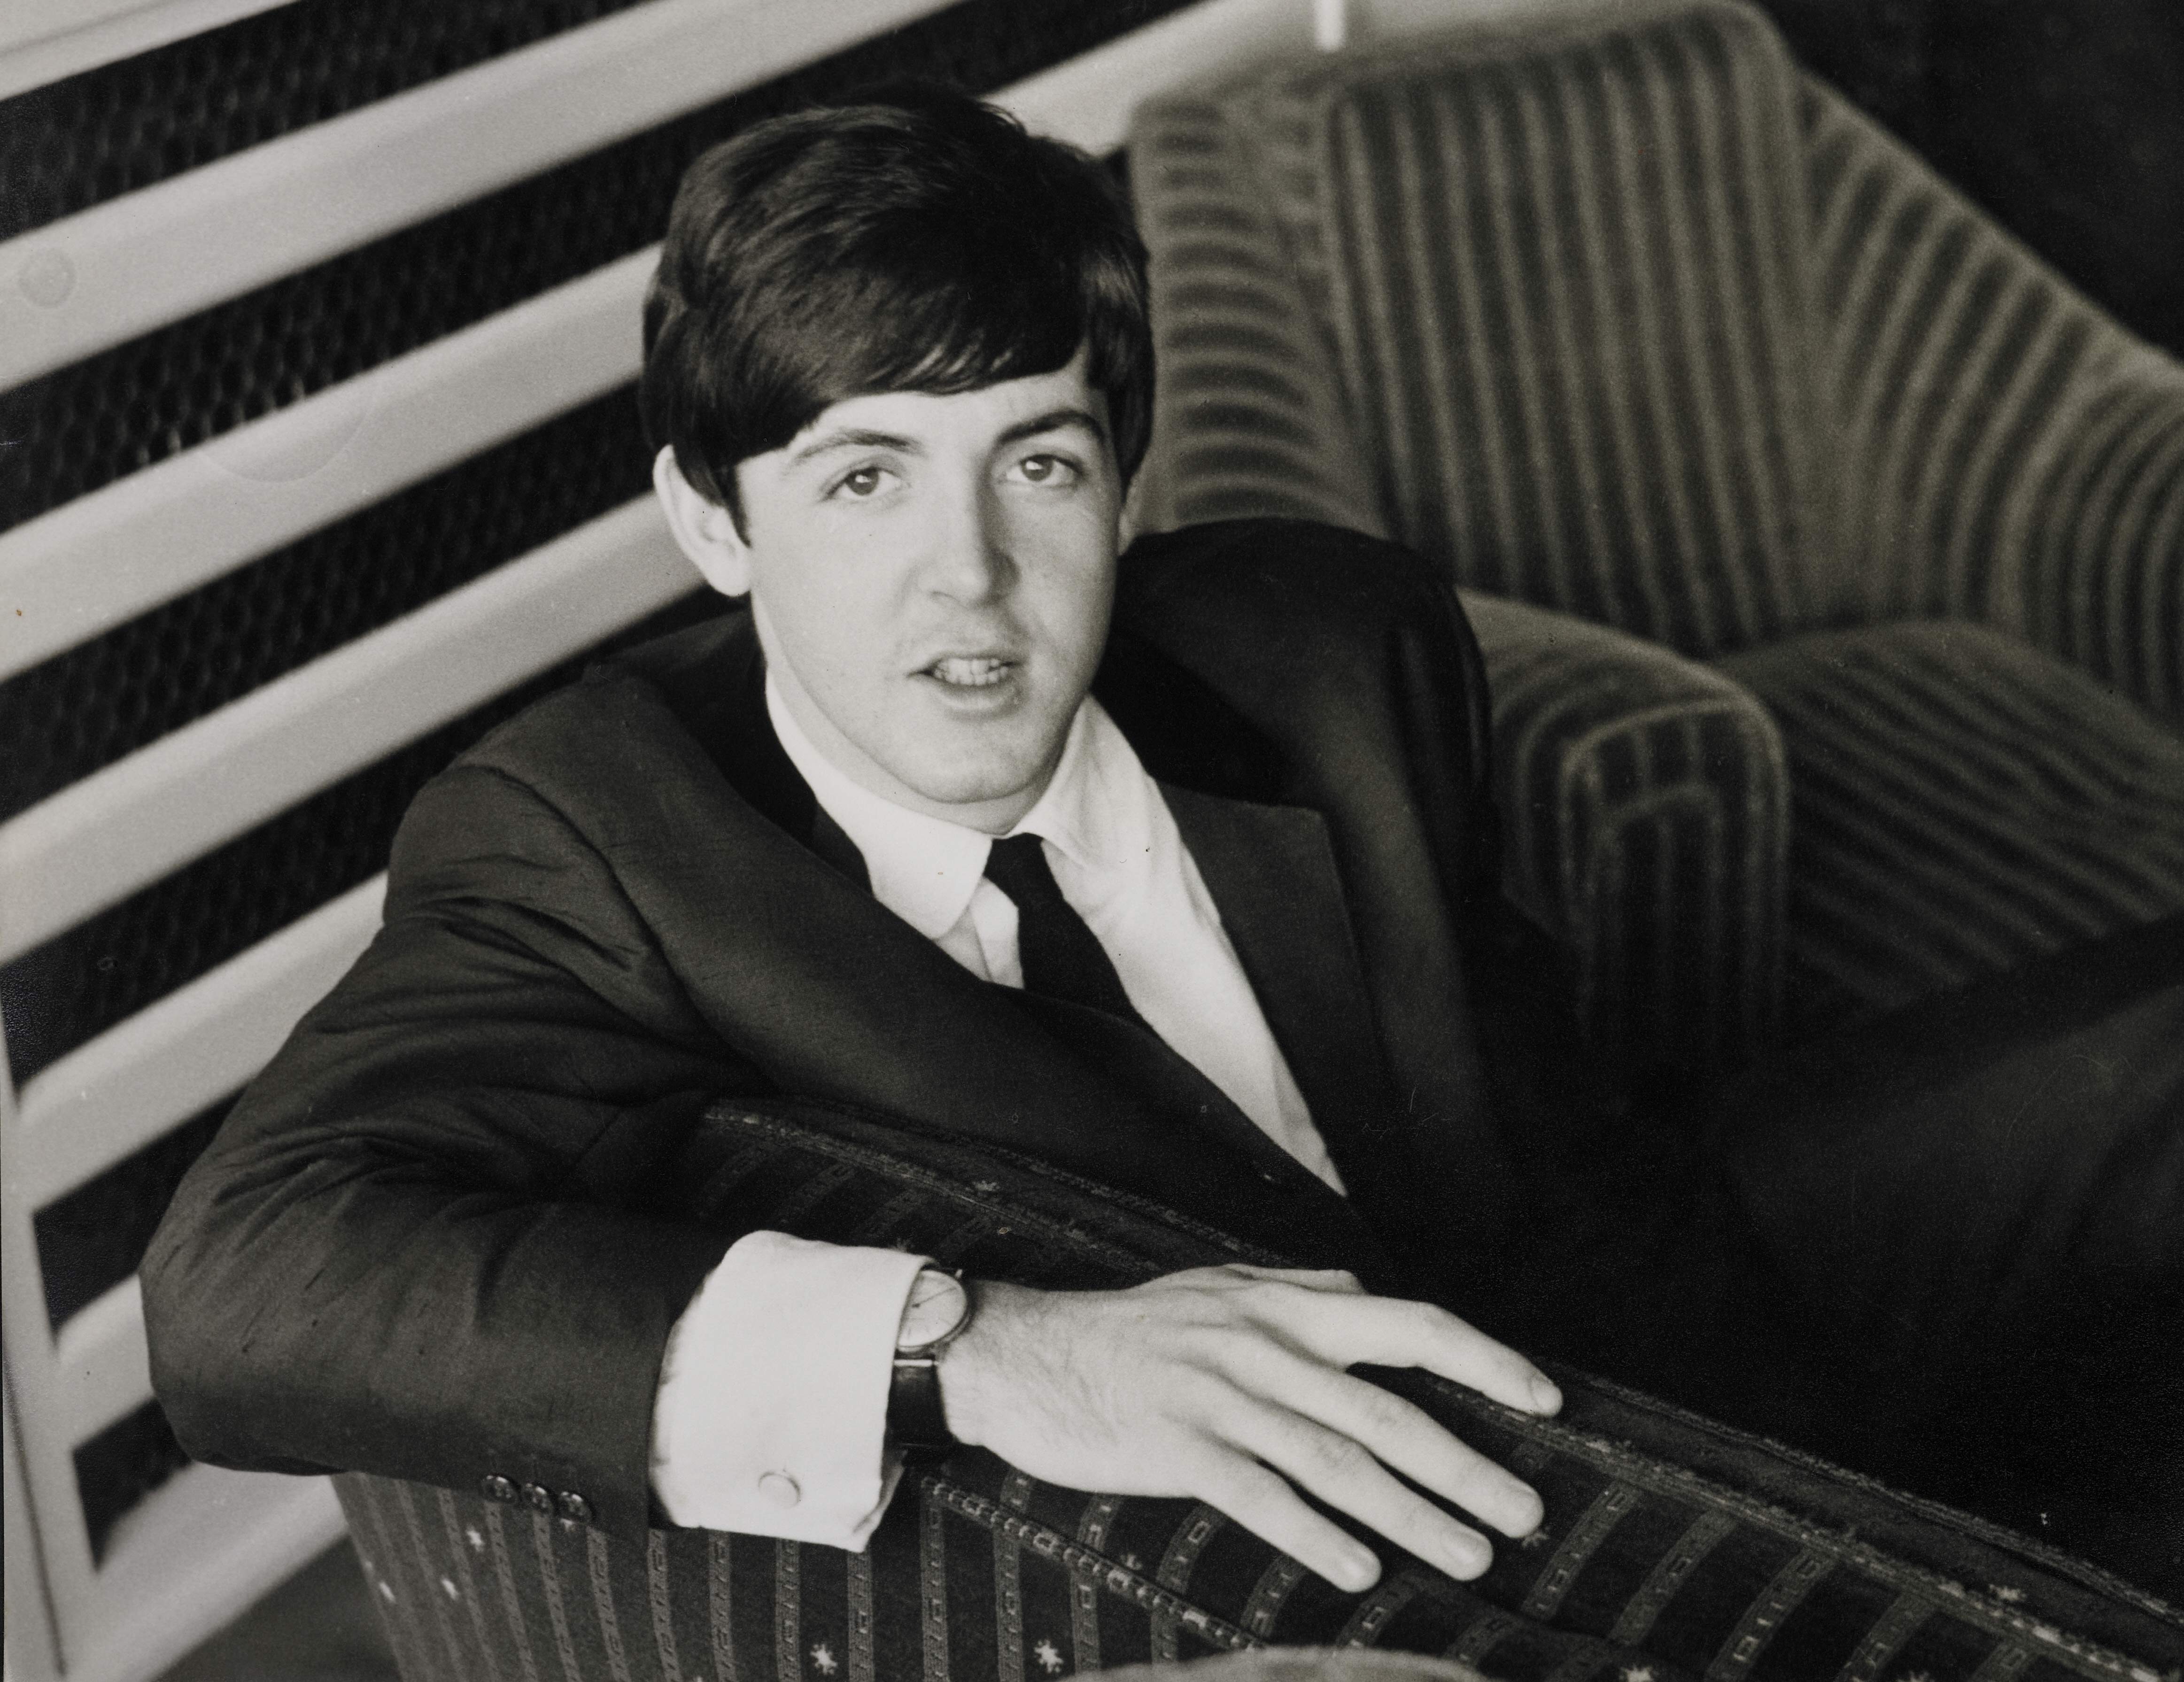 Paul McCartney sitting during The Beatles' "Day Tripper" era